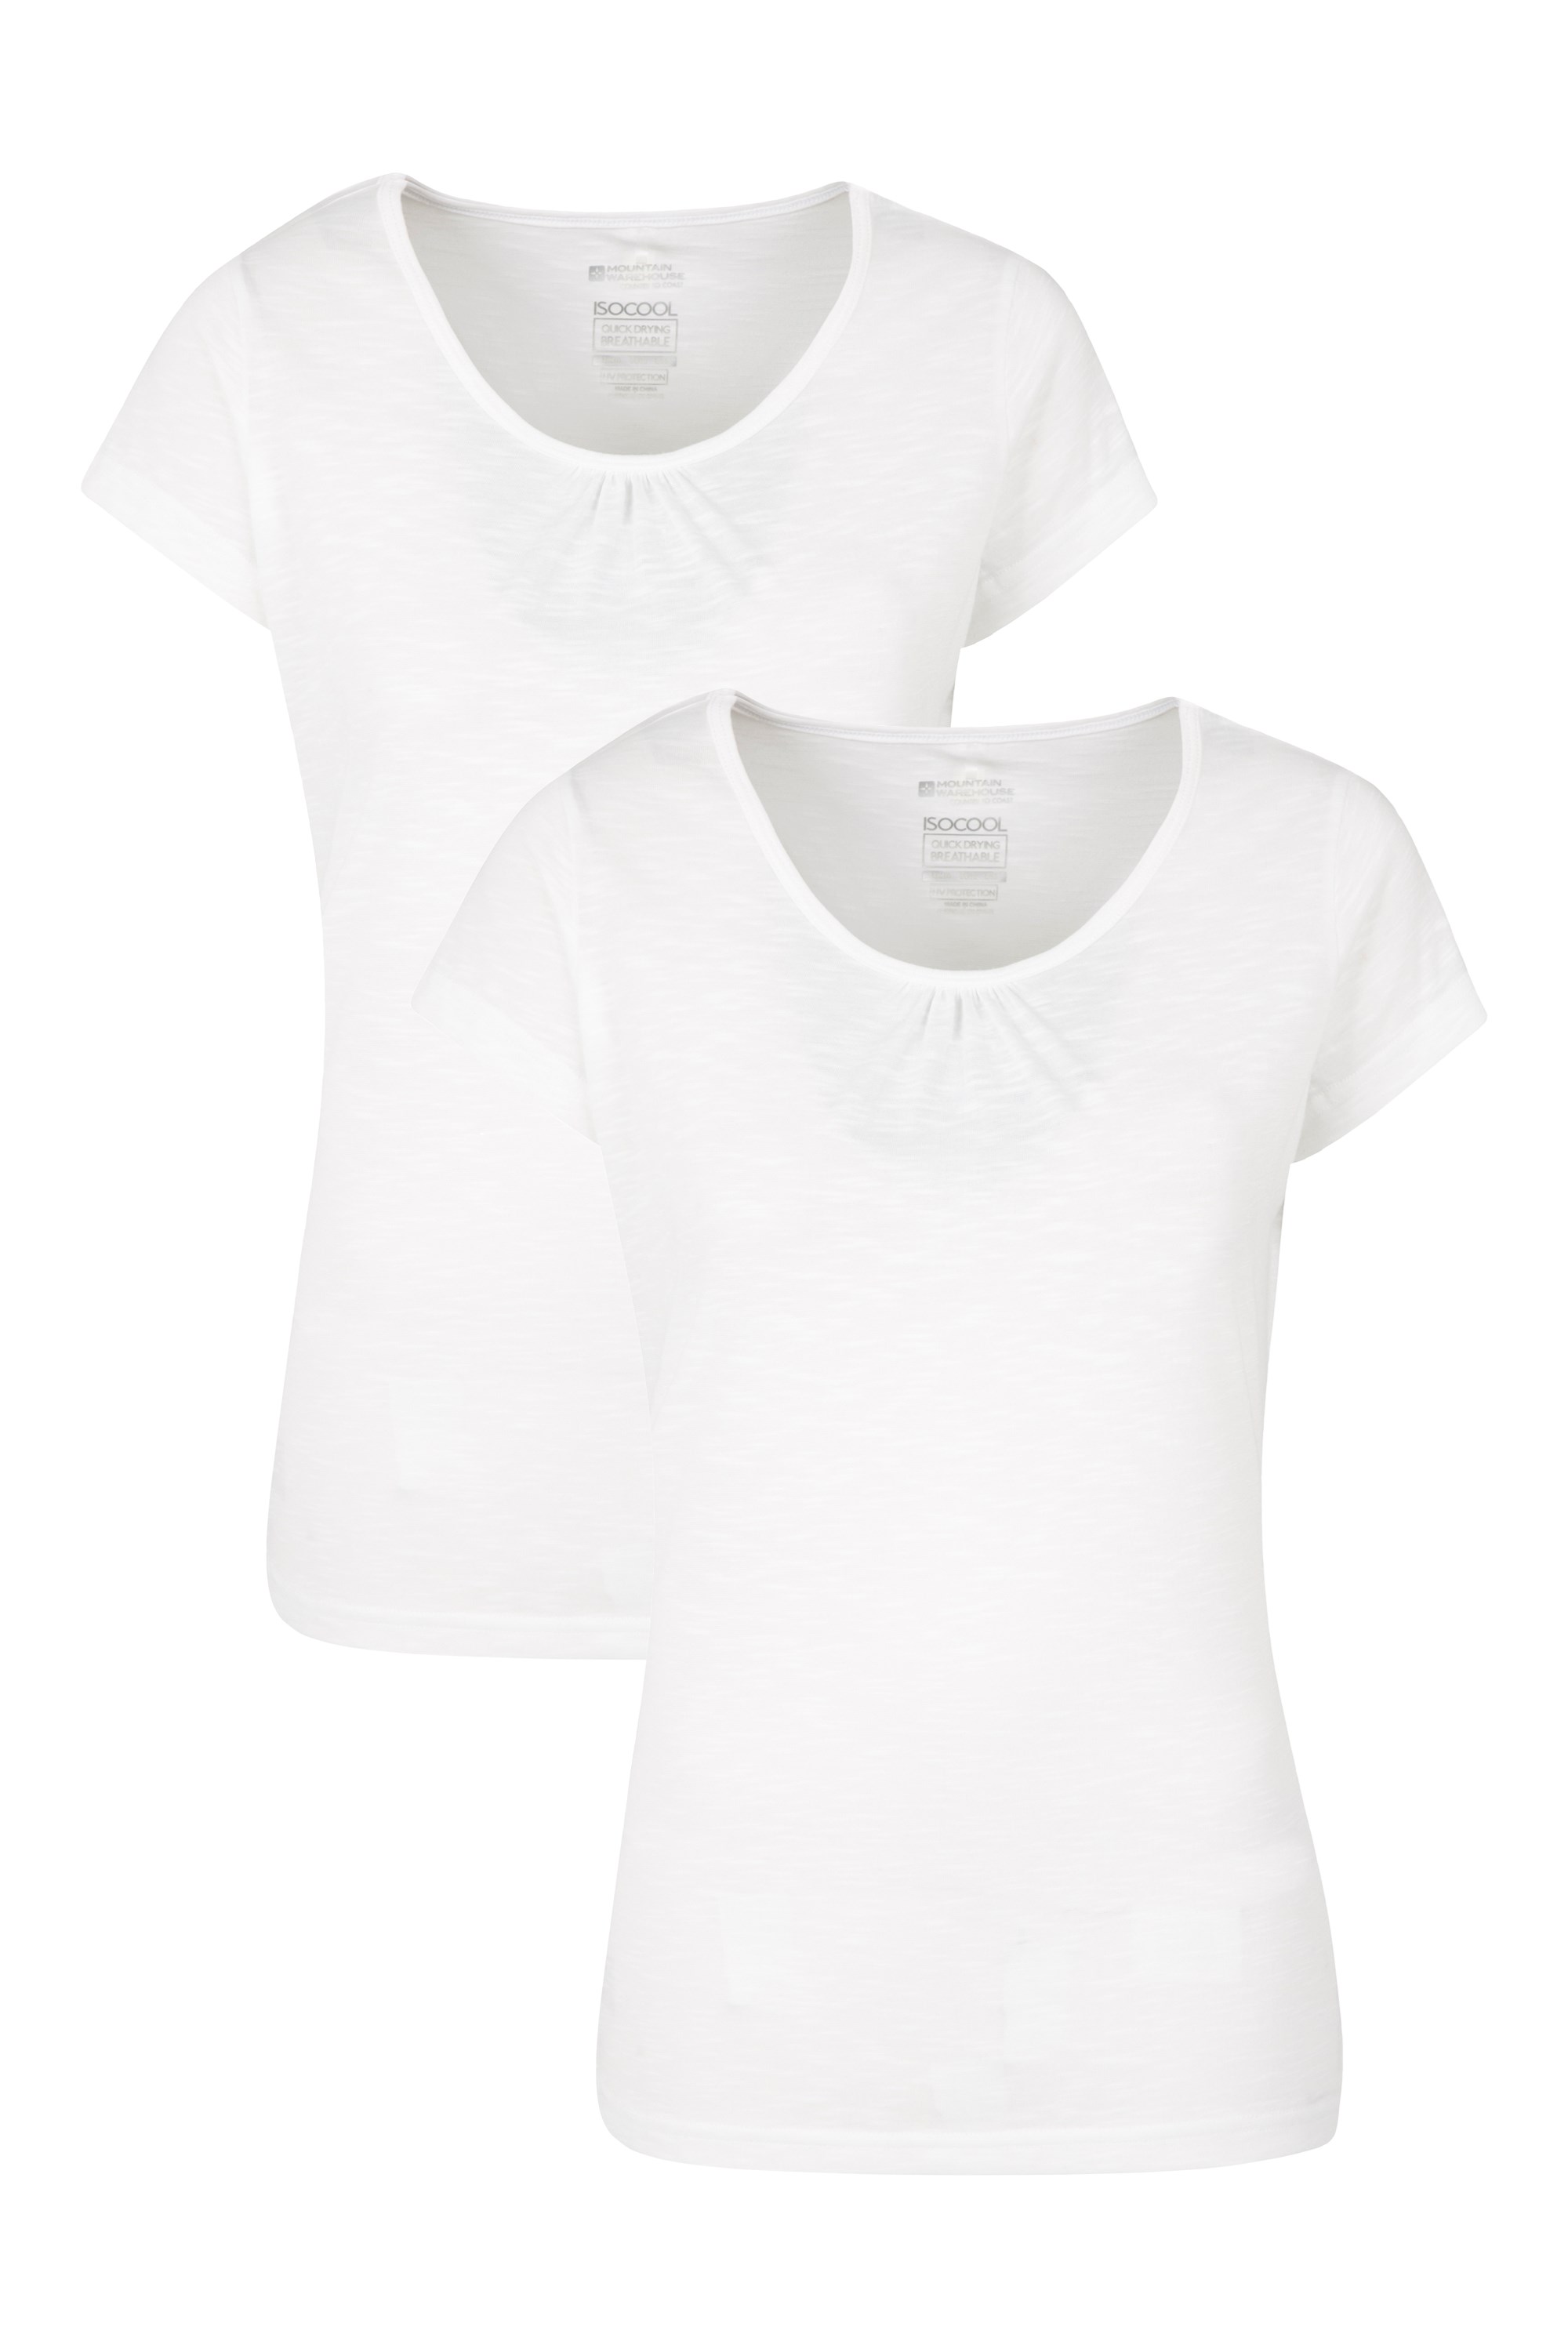 Agra Quick-dry Womens T-shirt - 2 Pack - White